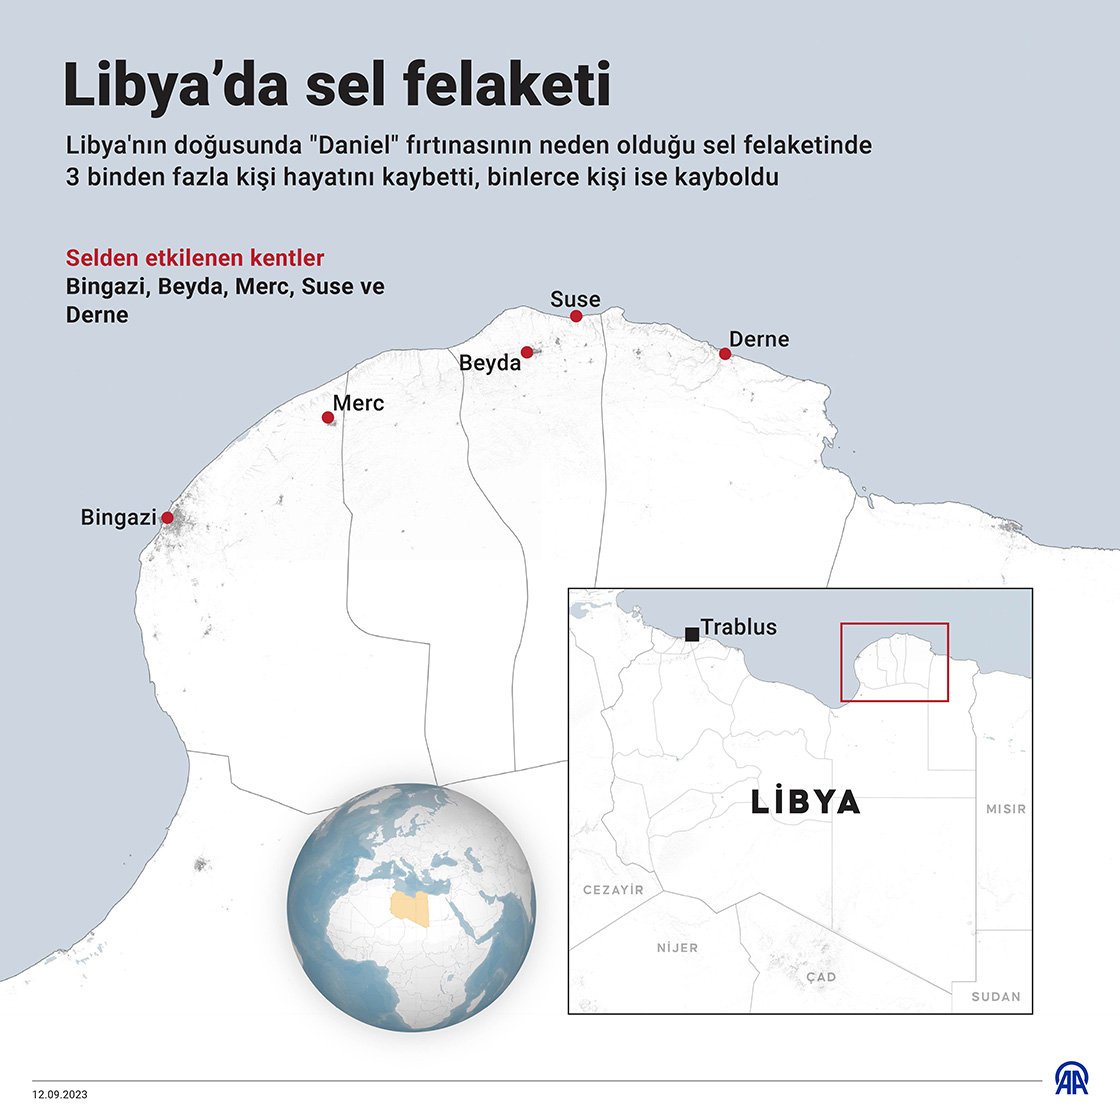 Libya’da sel felaketi